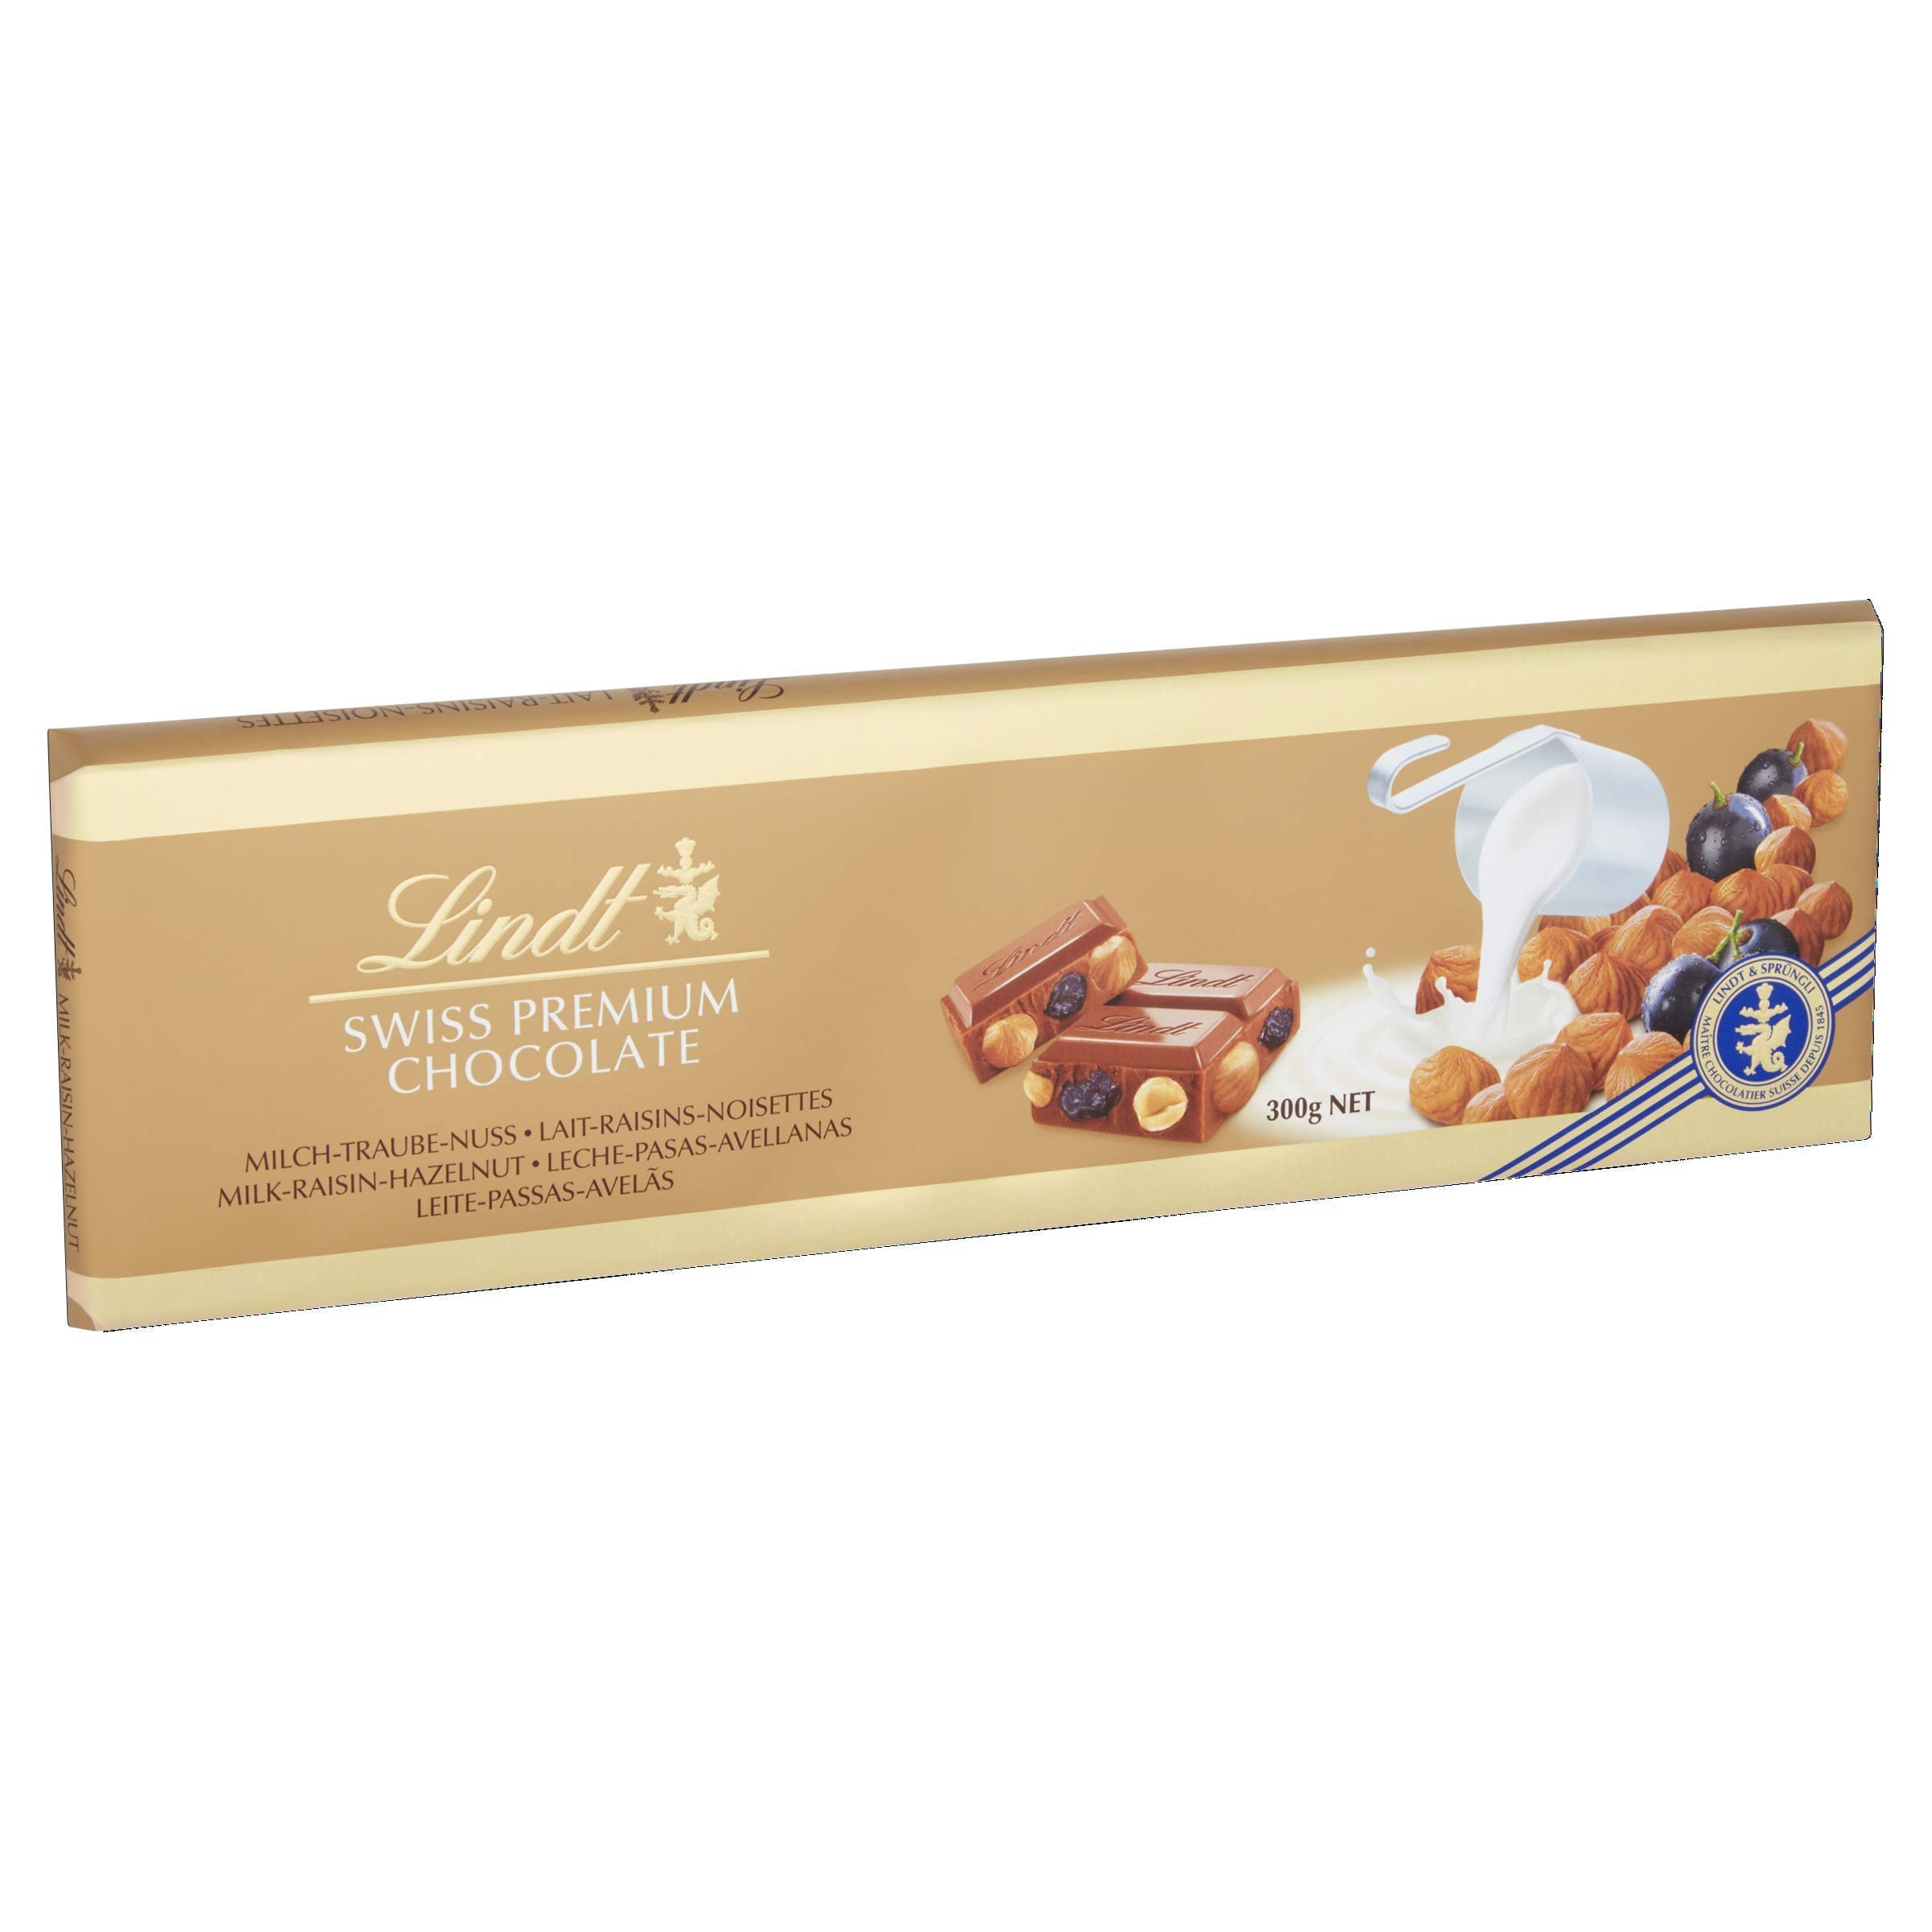 Lindt Swiss Premium Gold Milk Chocolate with Hazelnuts and Raisins Bar, 300 g